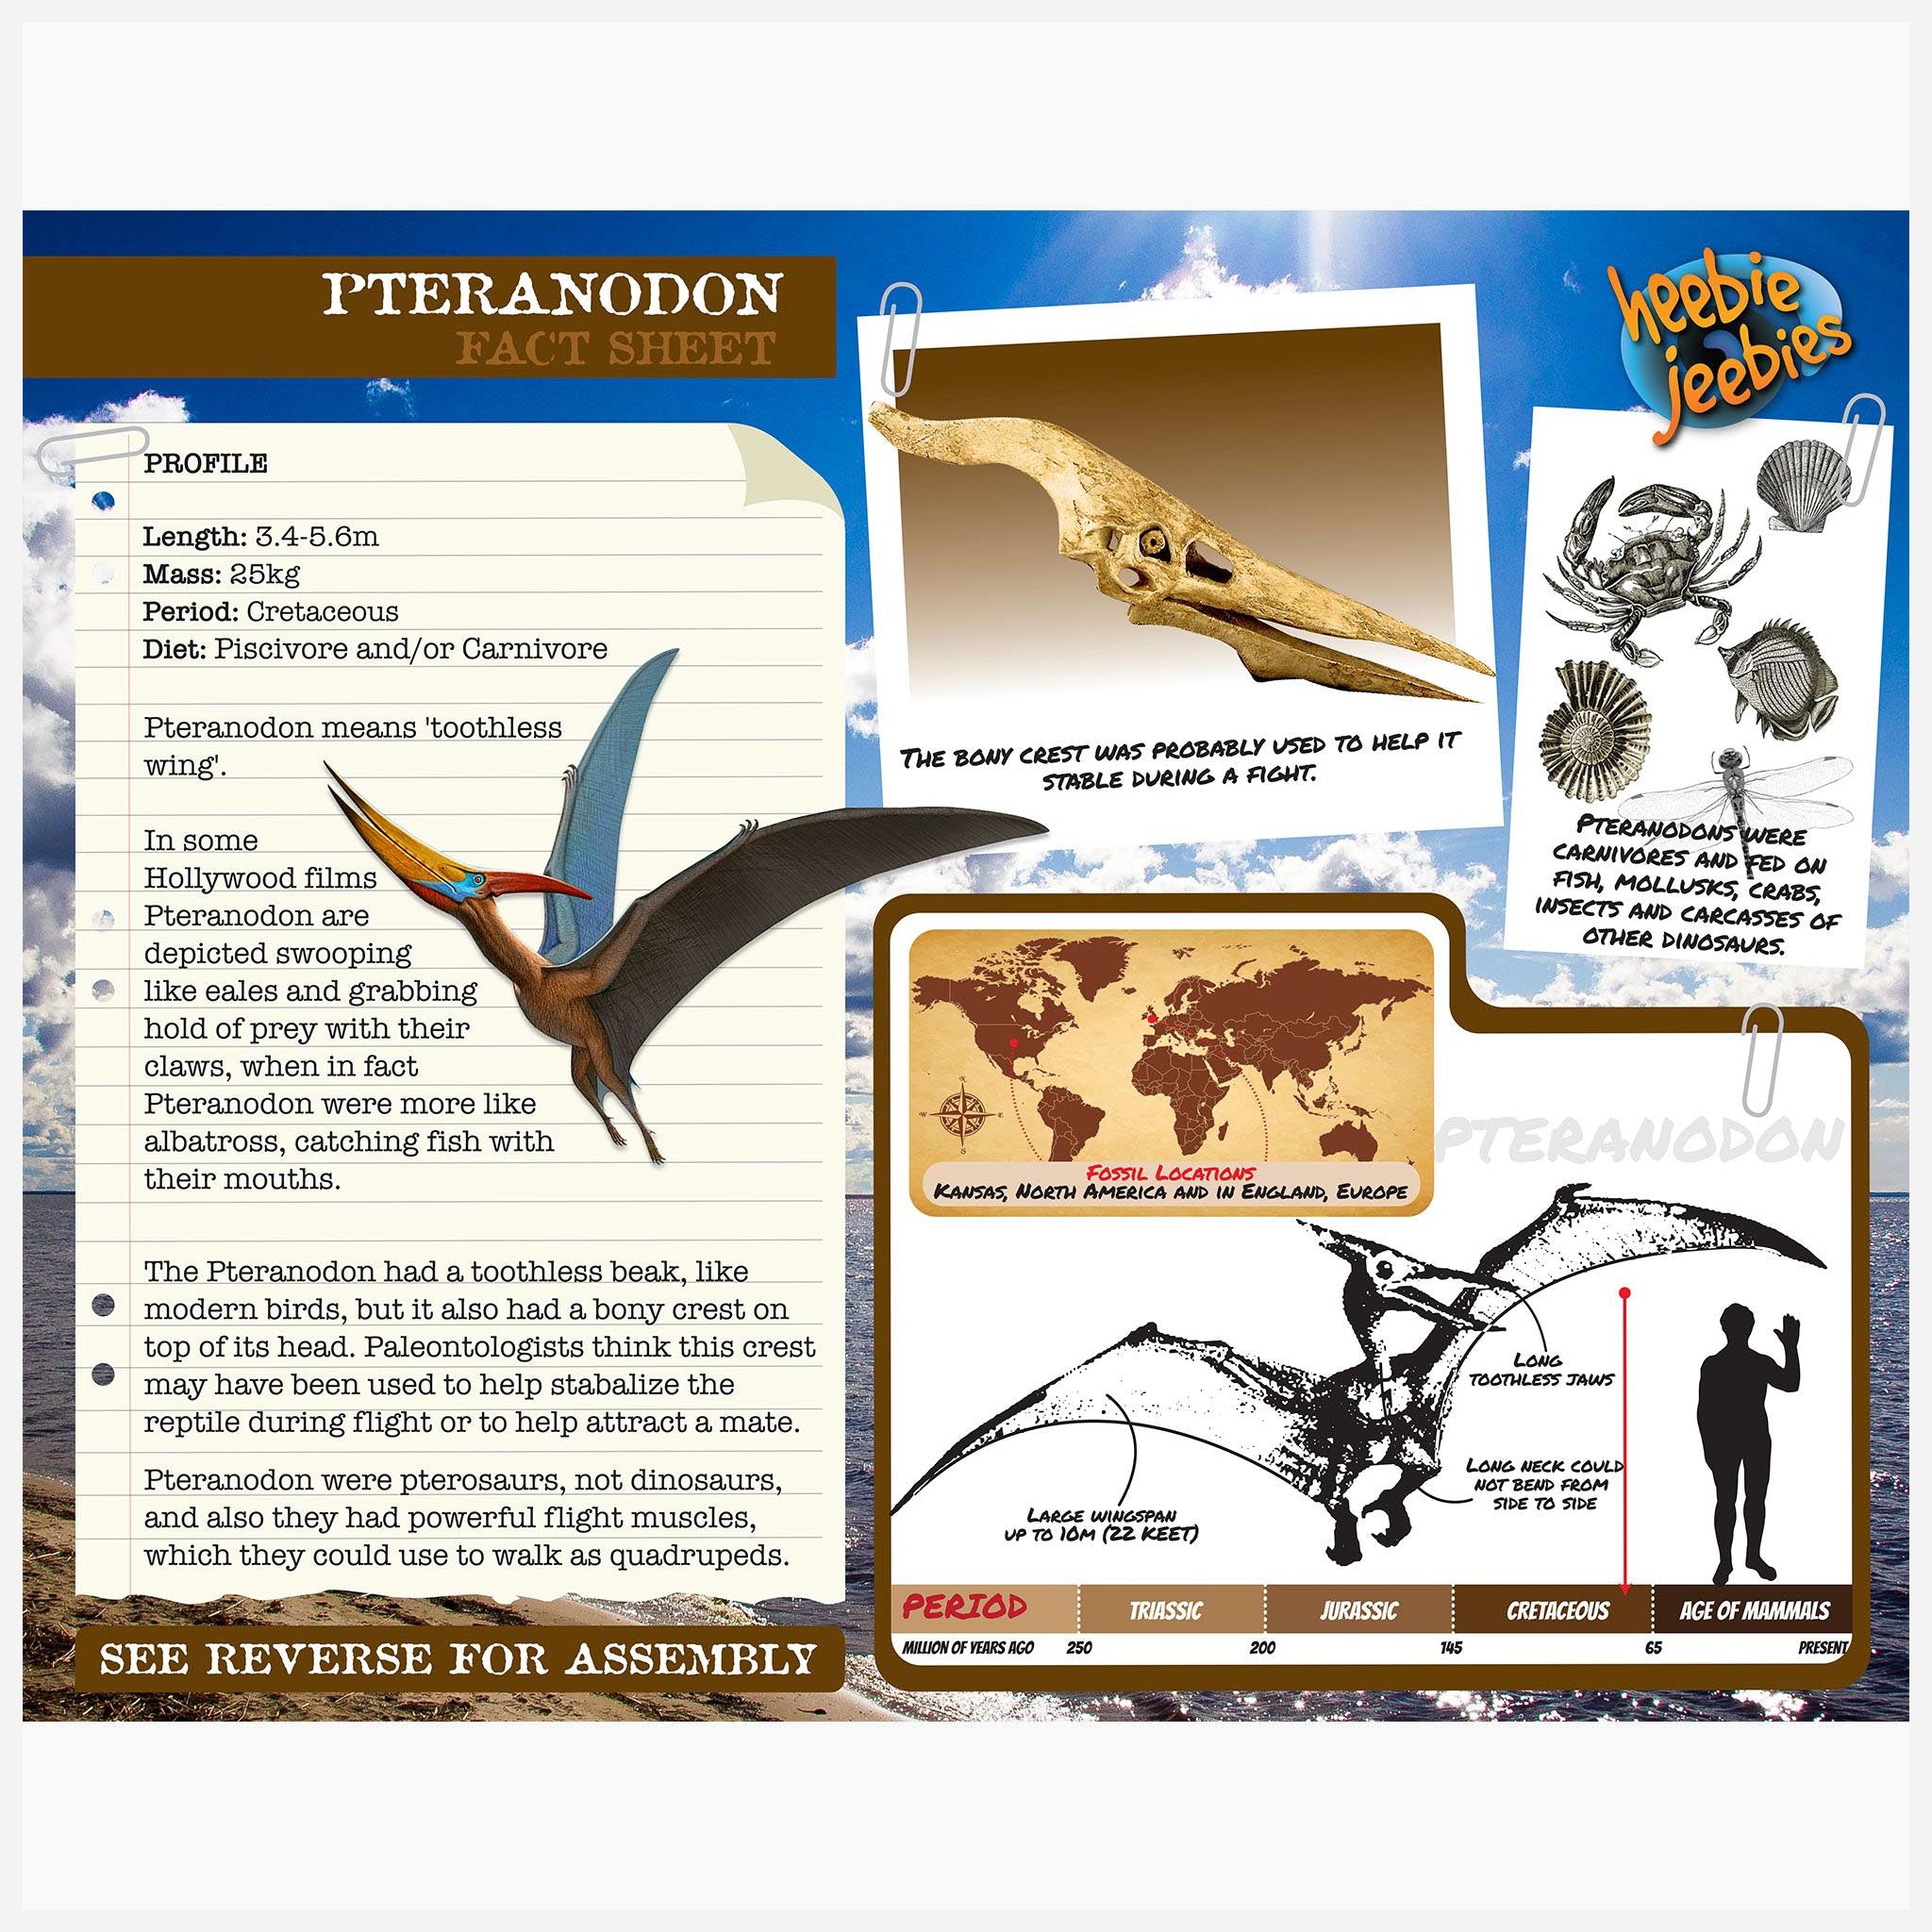 pteranodonwoodkitback.jpg